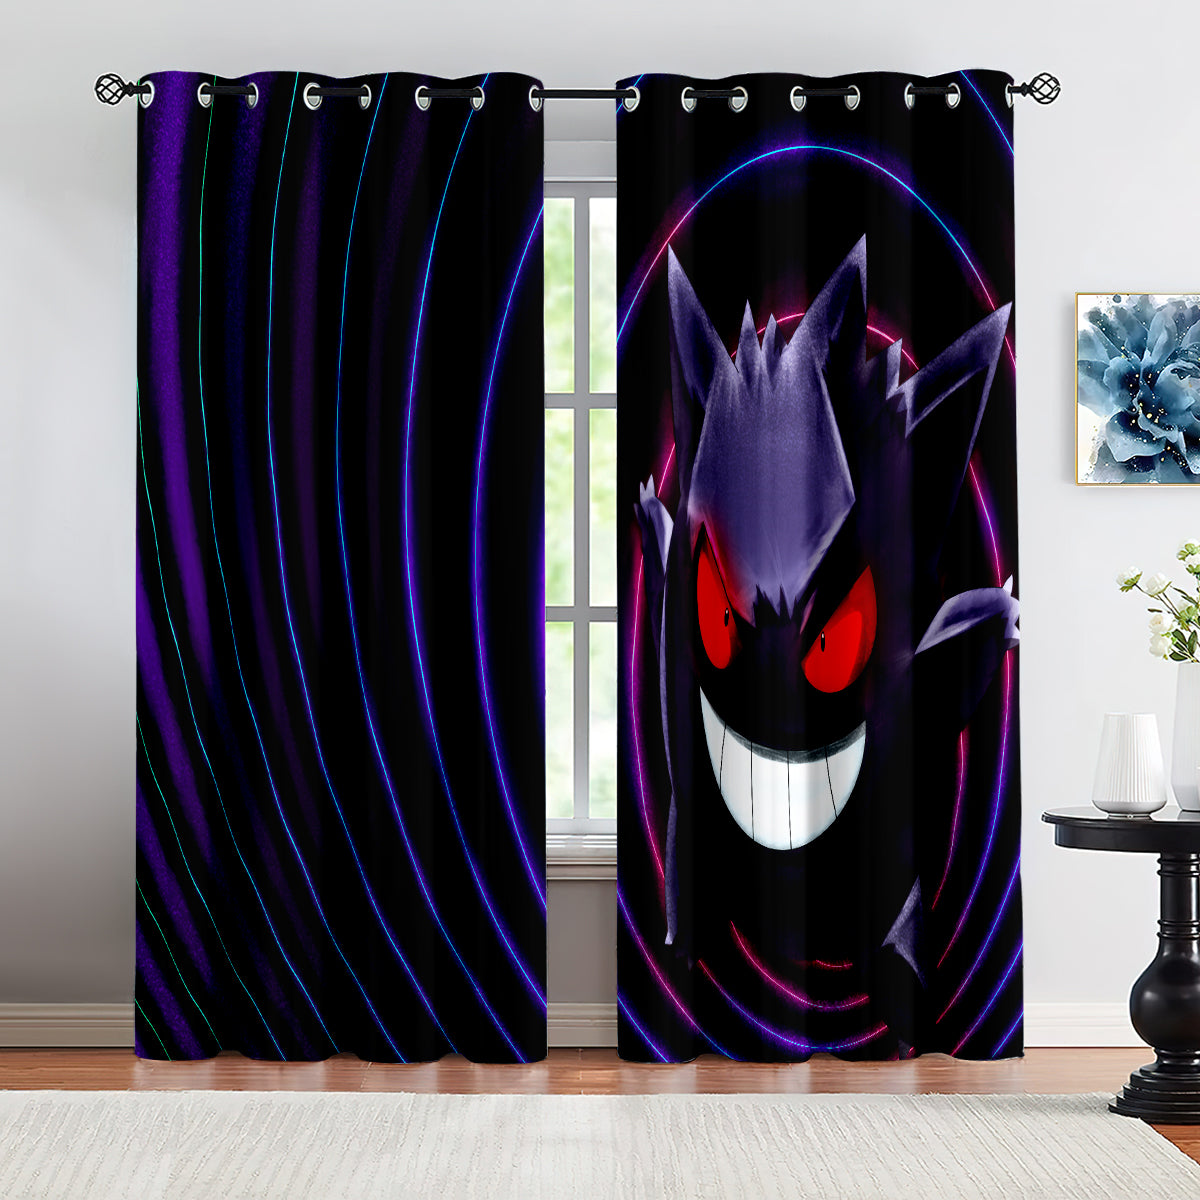 Pokemon Gengar Blackout Curtains Drapes for Window Treatment Set